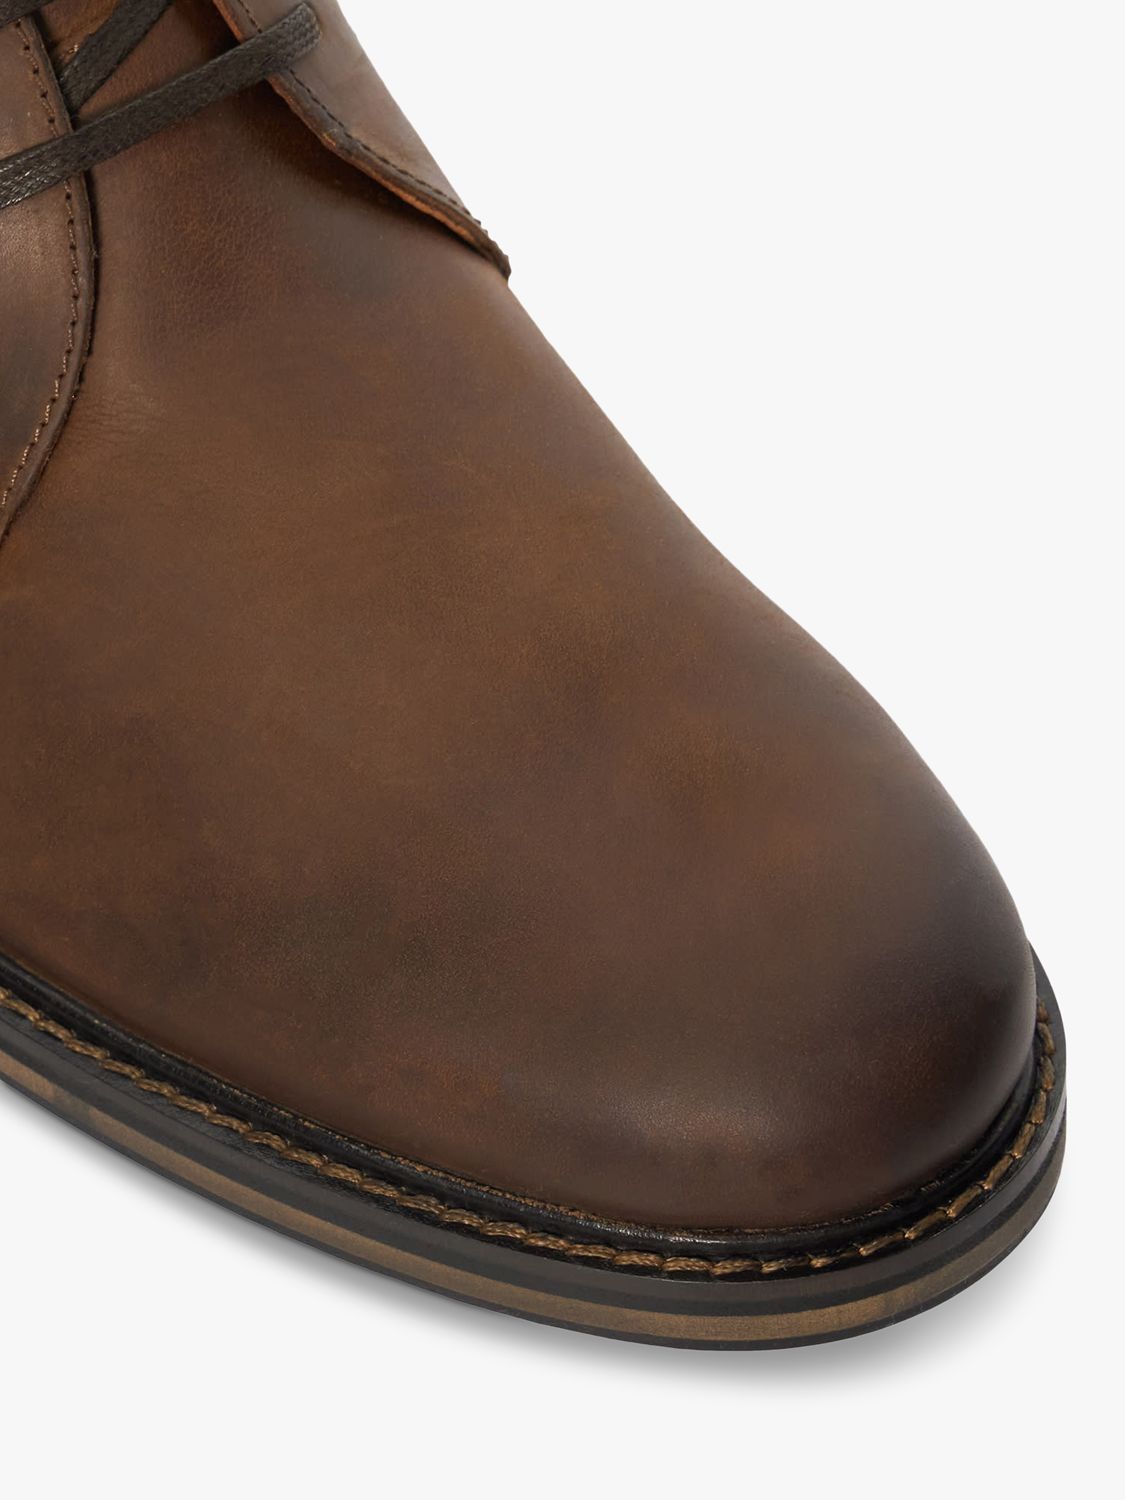 Dune Charleys Leather Chukka Boots, Brown, 7